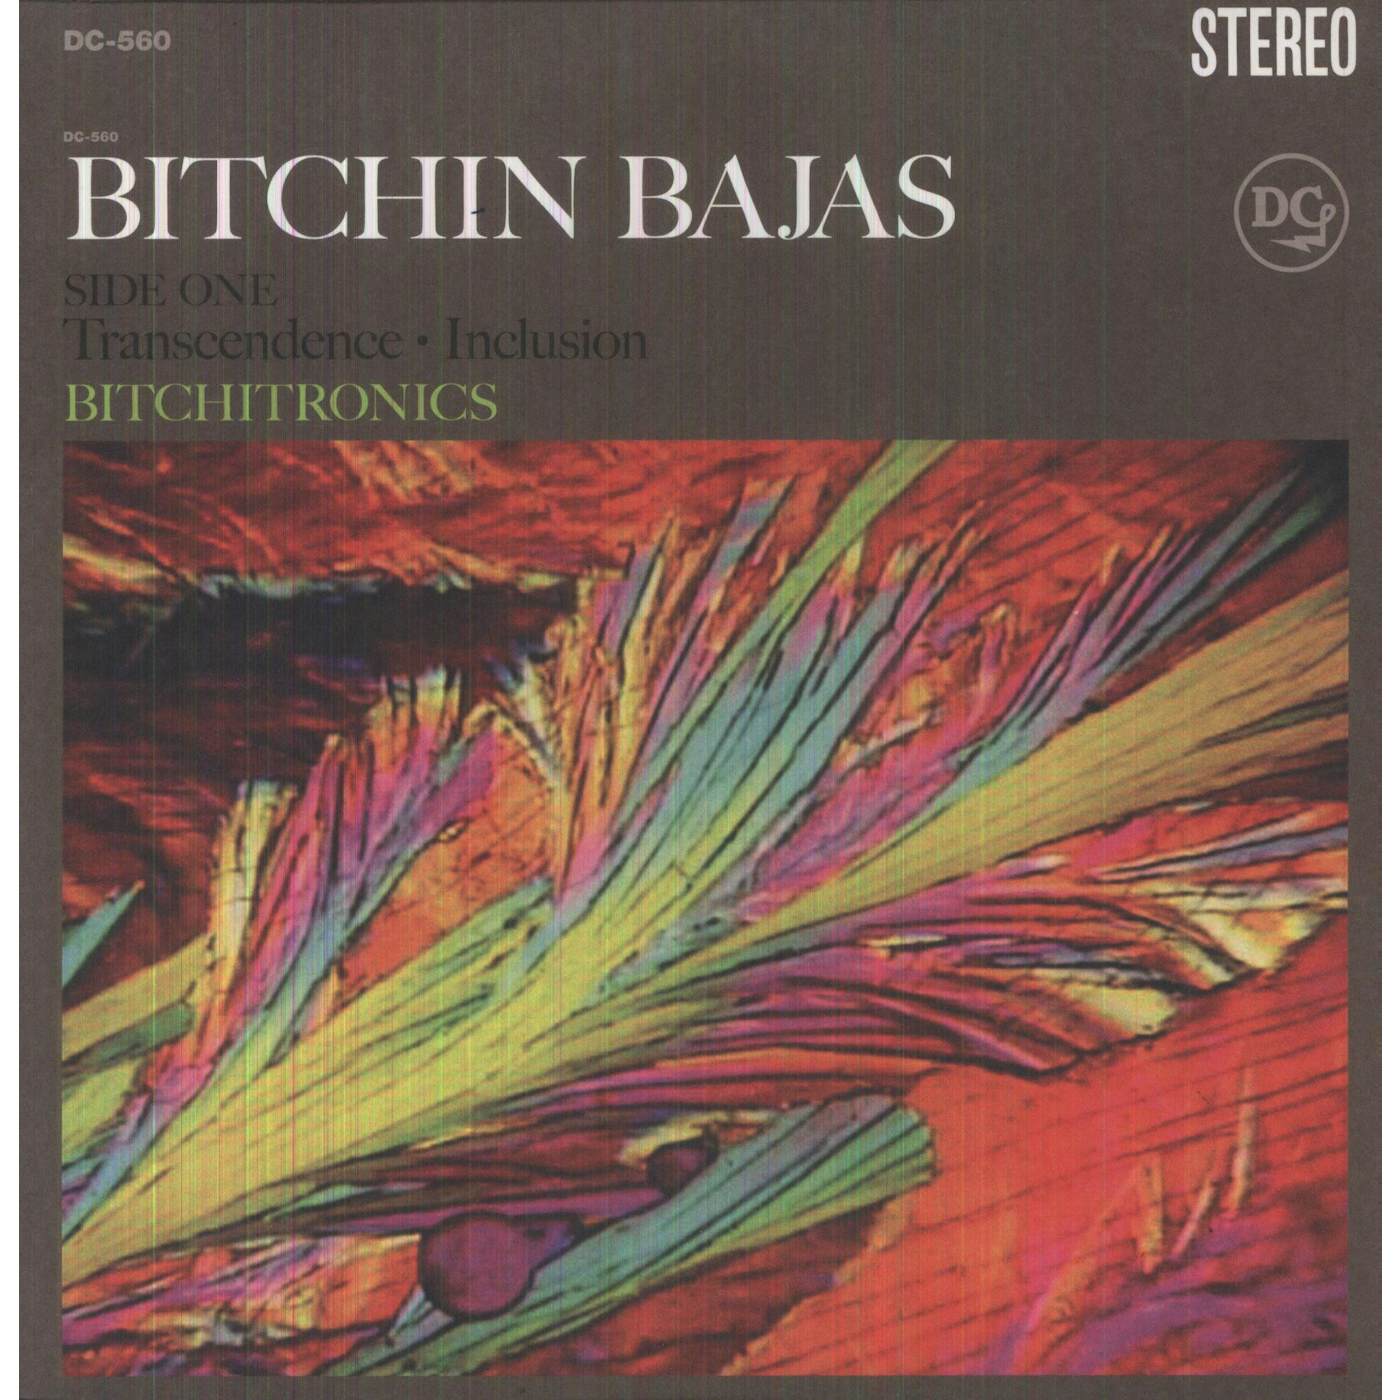 Bitchin Bajas Bitchitronics Vinyl Record